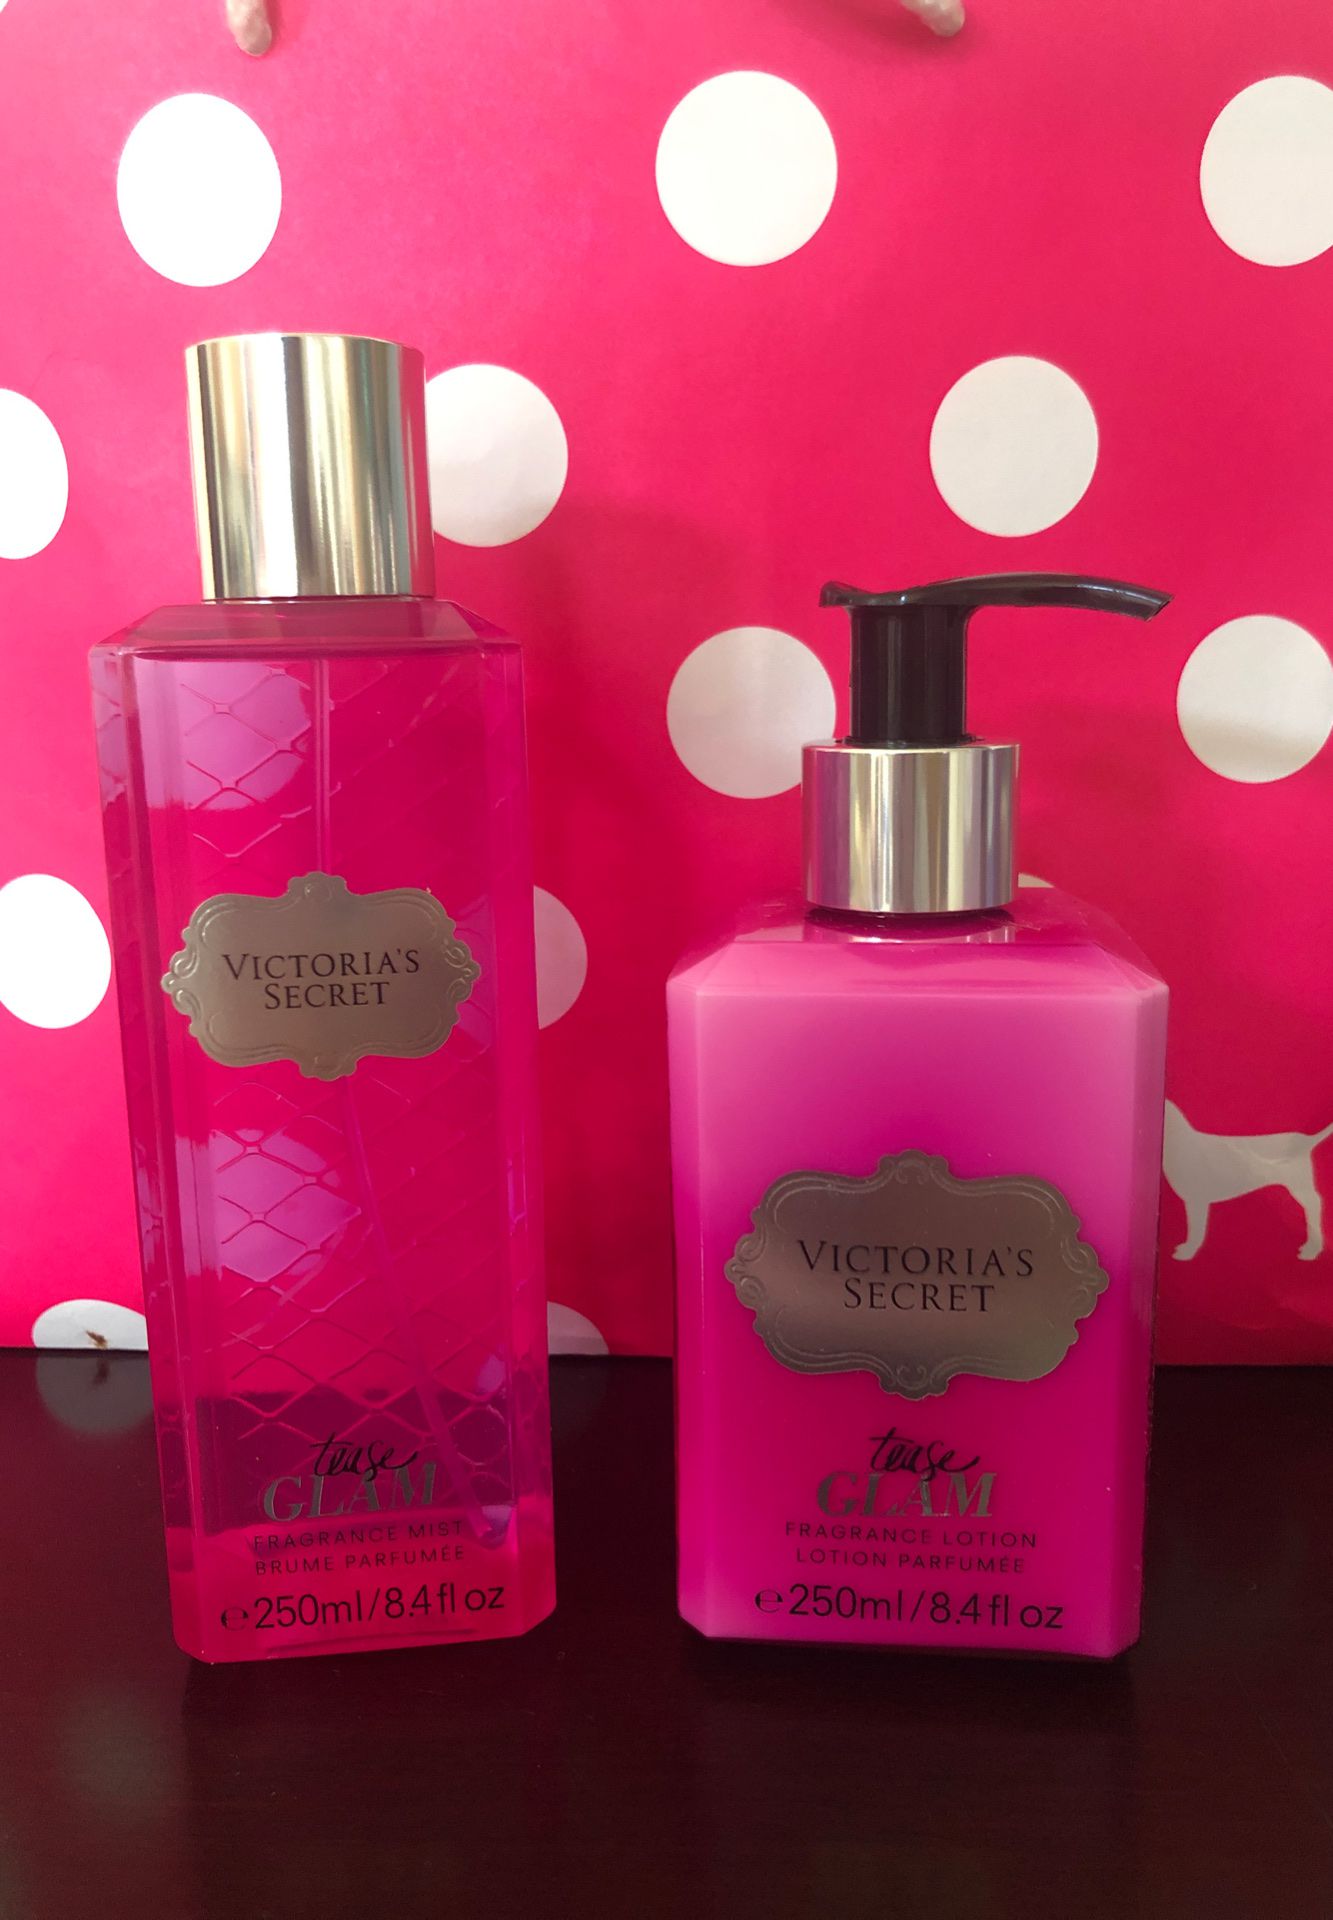 Victoria’s Secret perfume mist and lotion sets